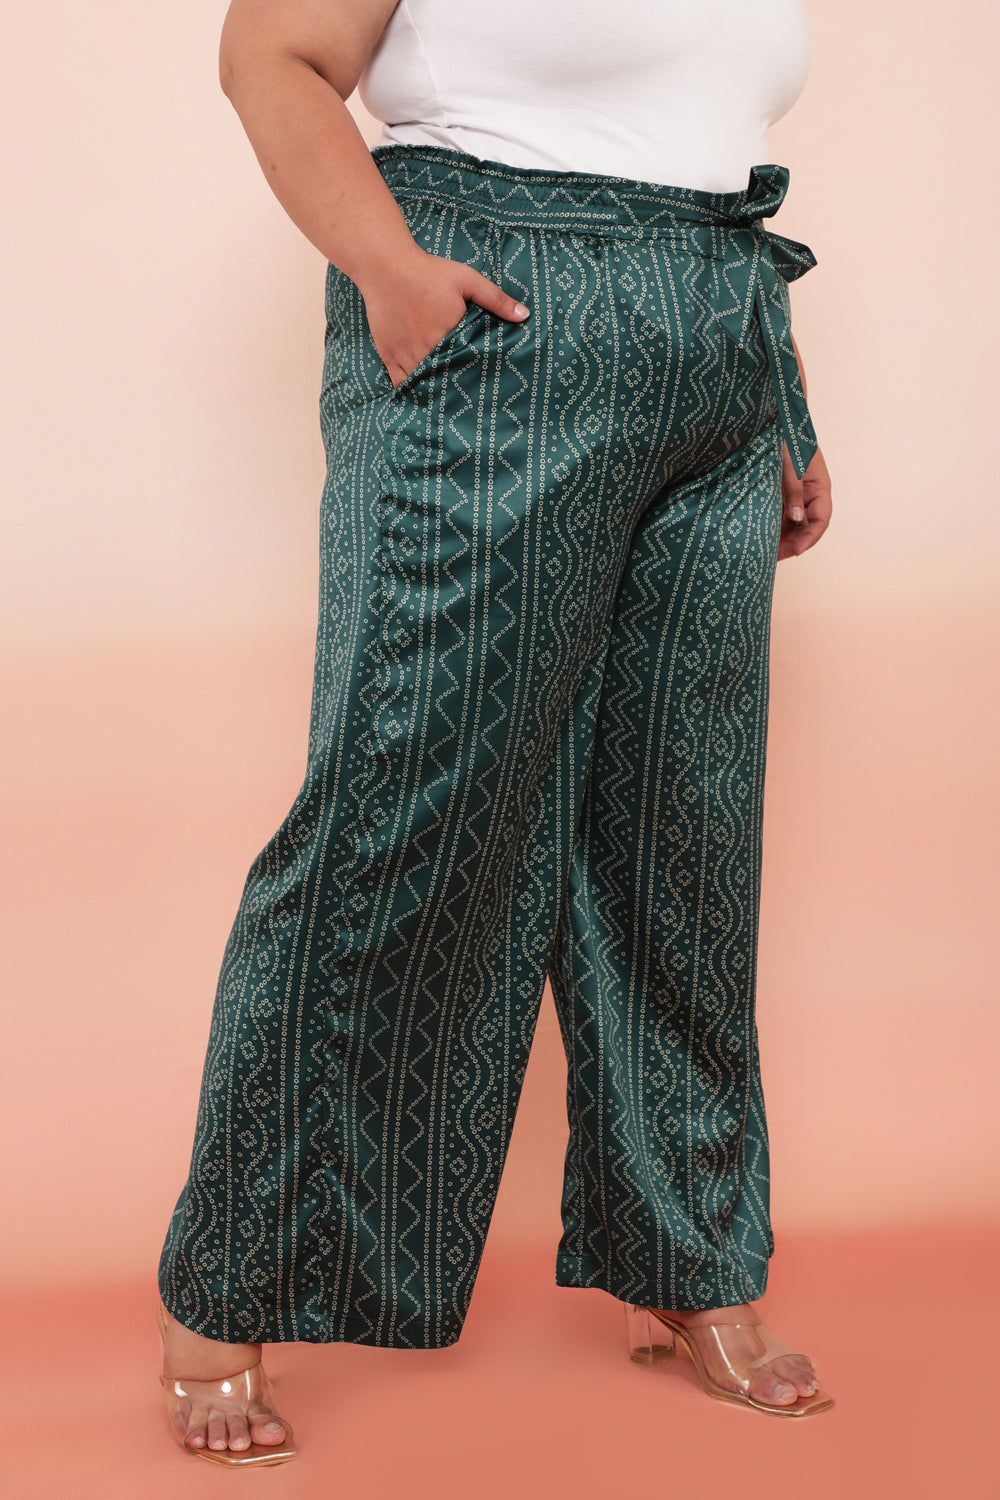 Green Bandhej Inspired High Waist Satin Pants for Women